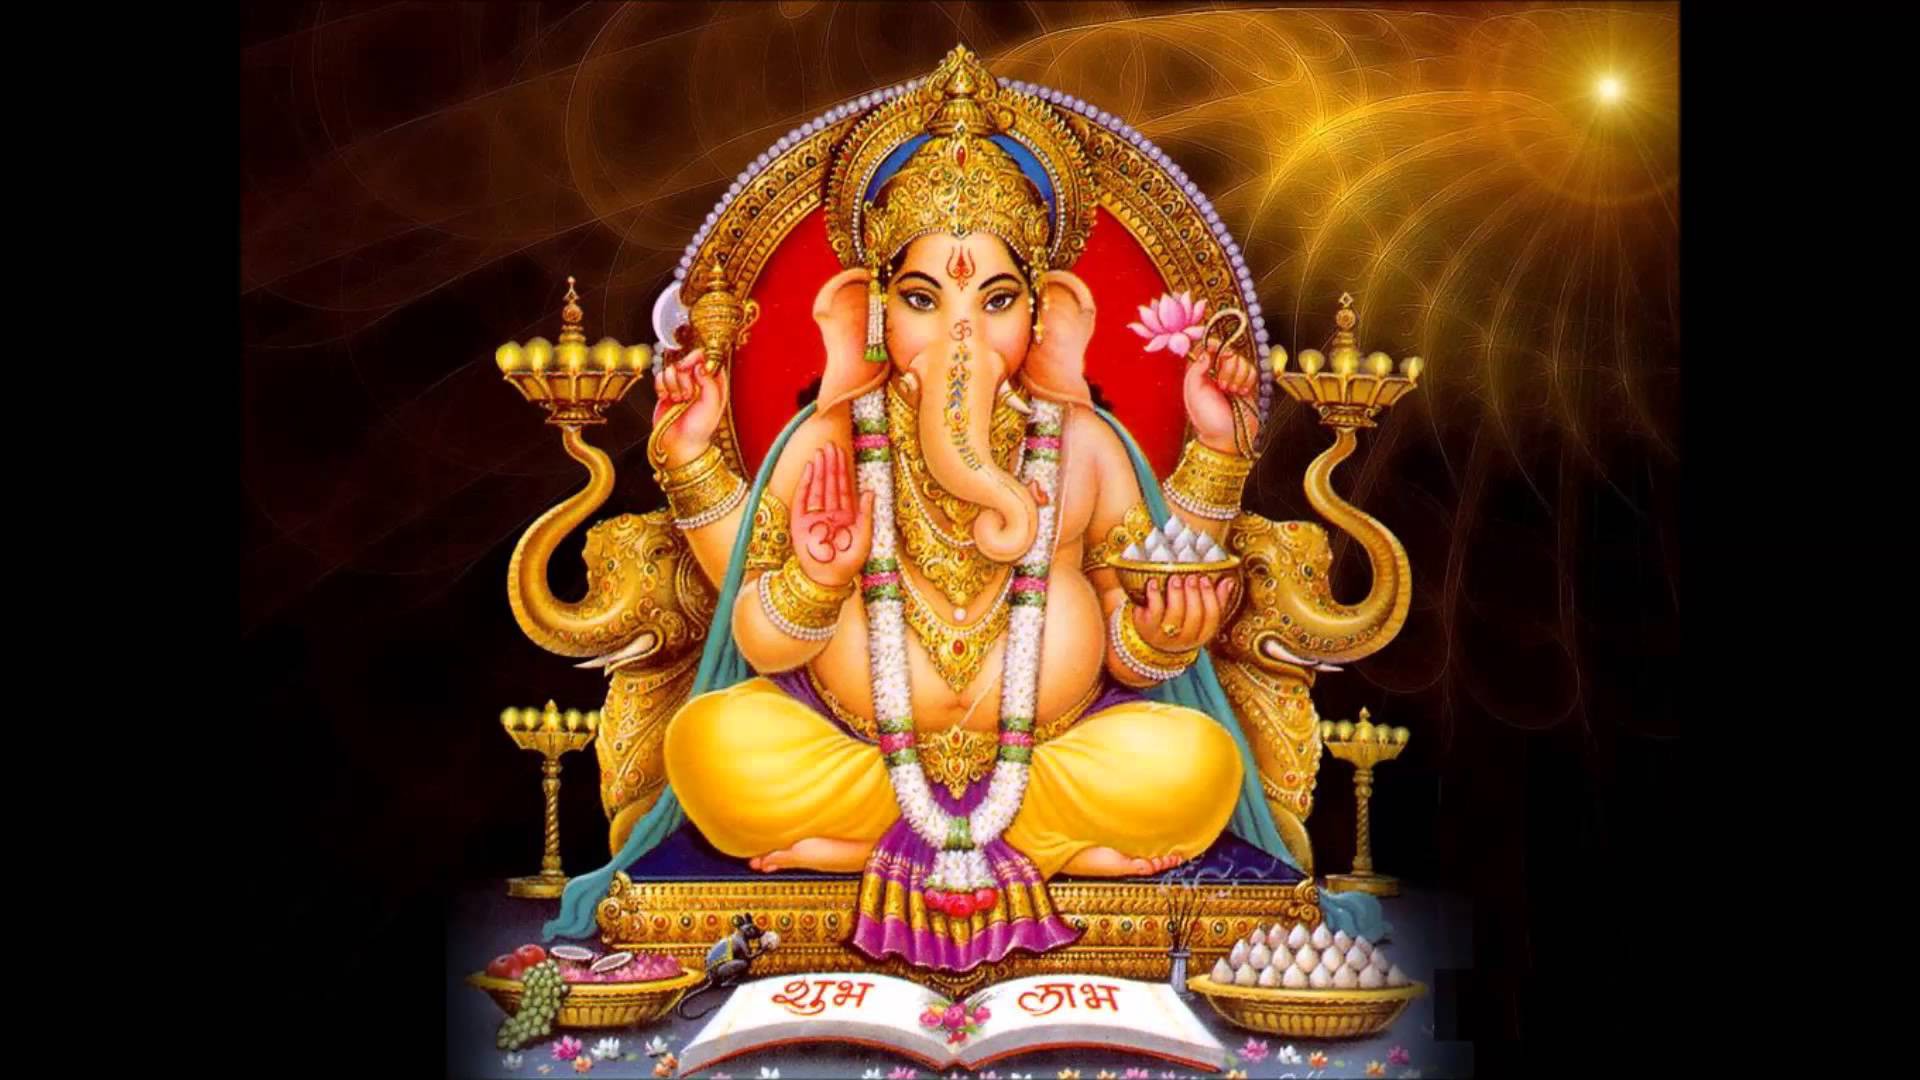 Jai Ganesha Free Awesome Image For Mobile